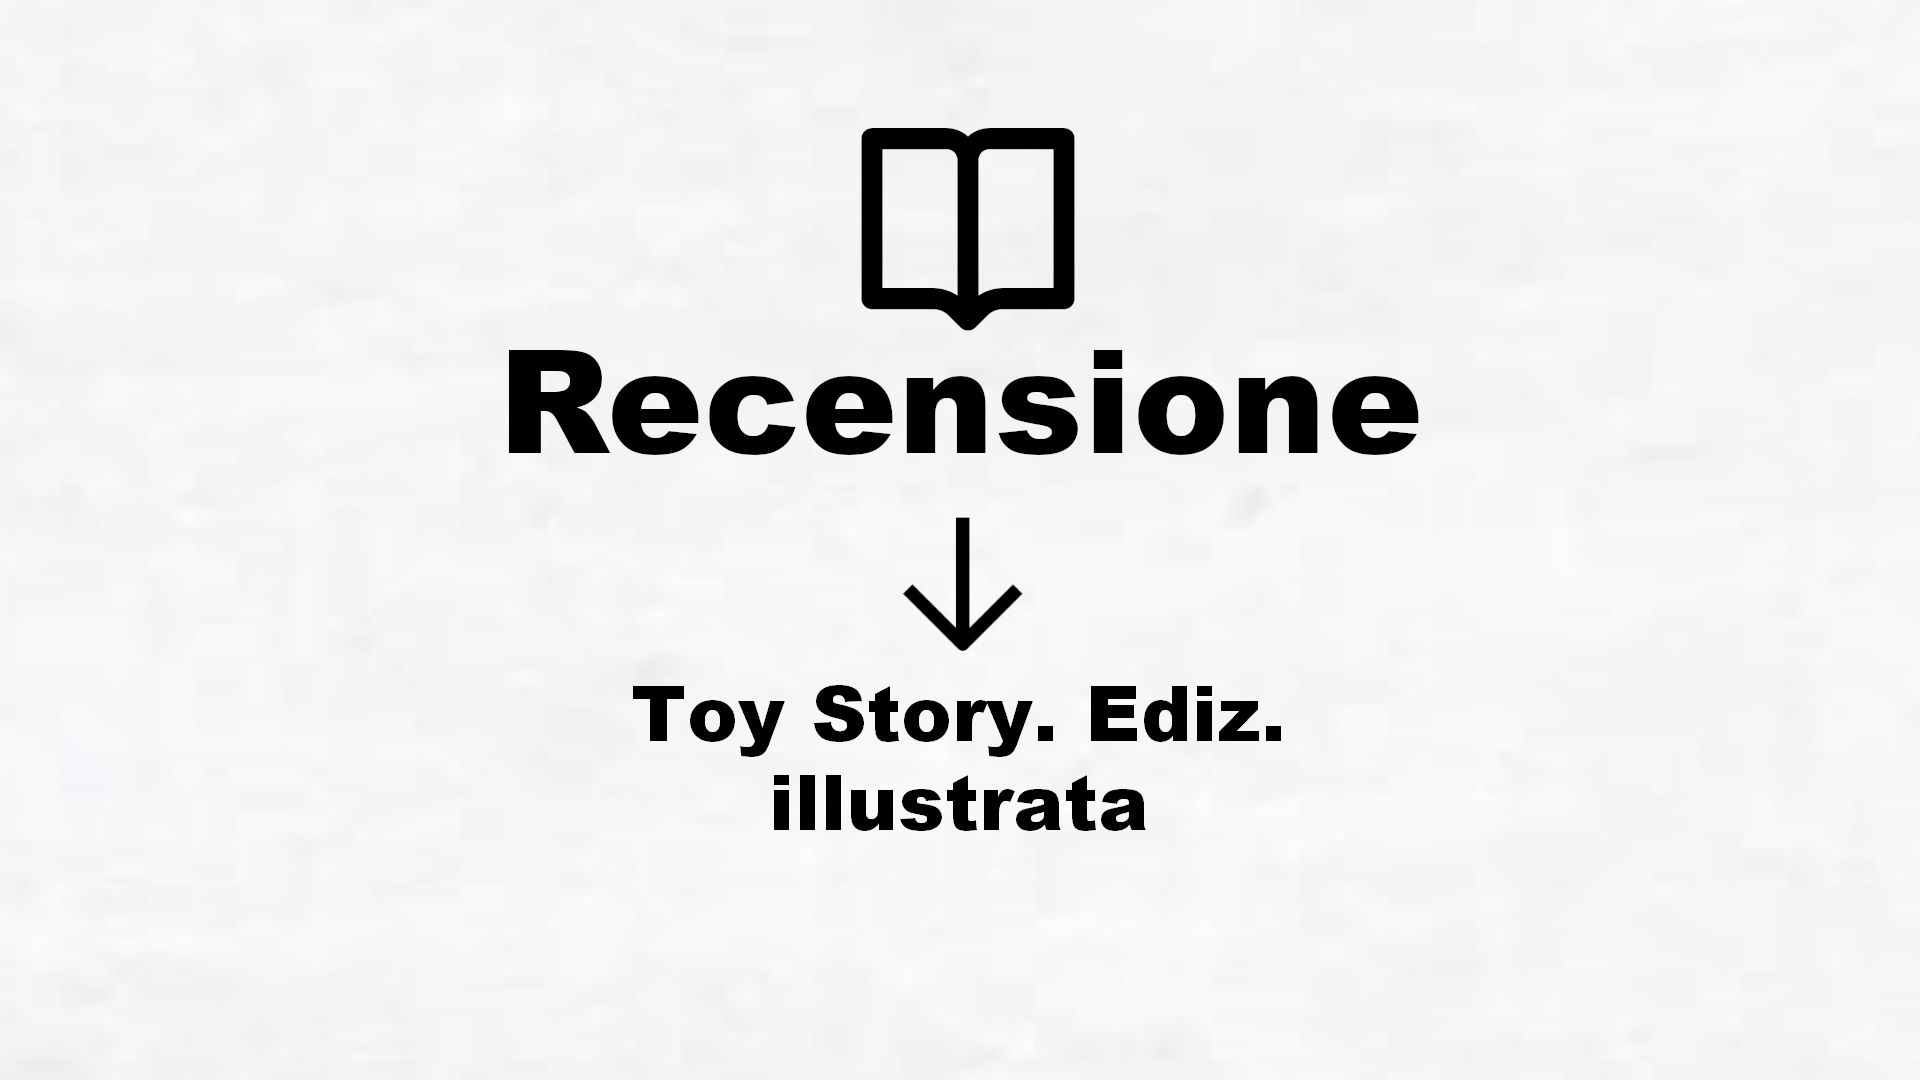 Toy Story. Ediz. illustrata – Recensione Libro